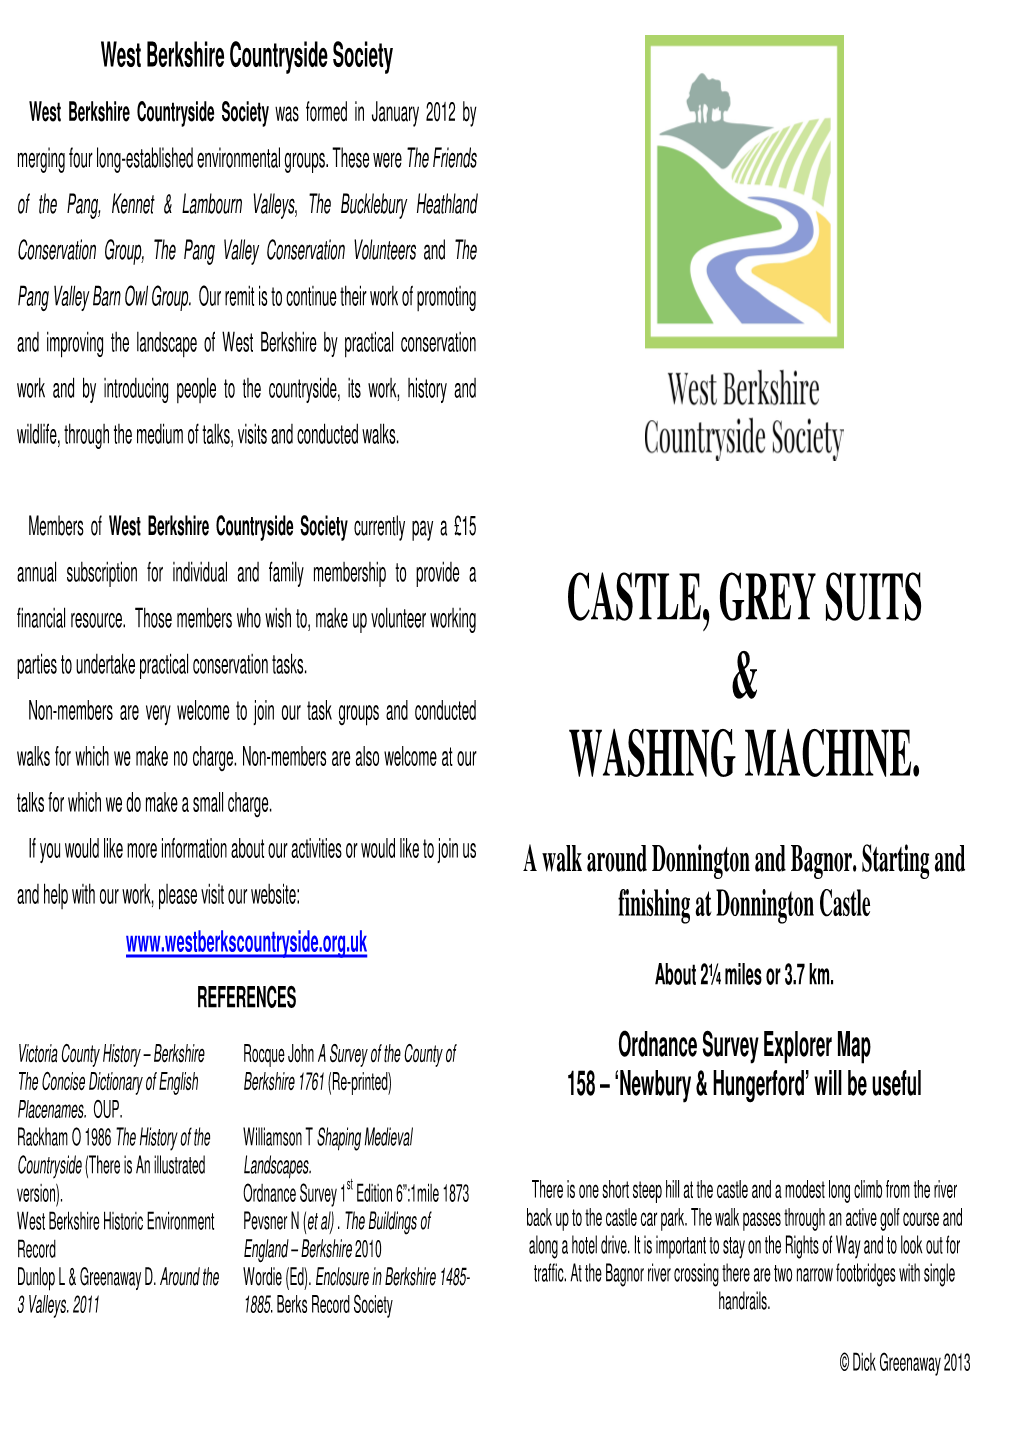 Castle, Grey Suits & Washing Machine